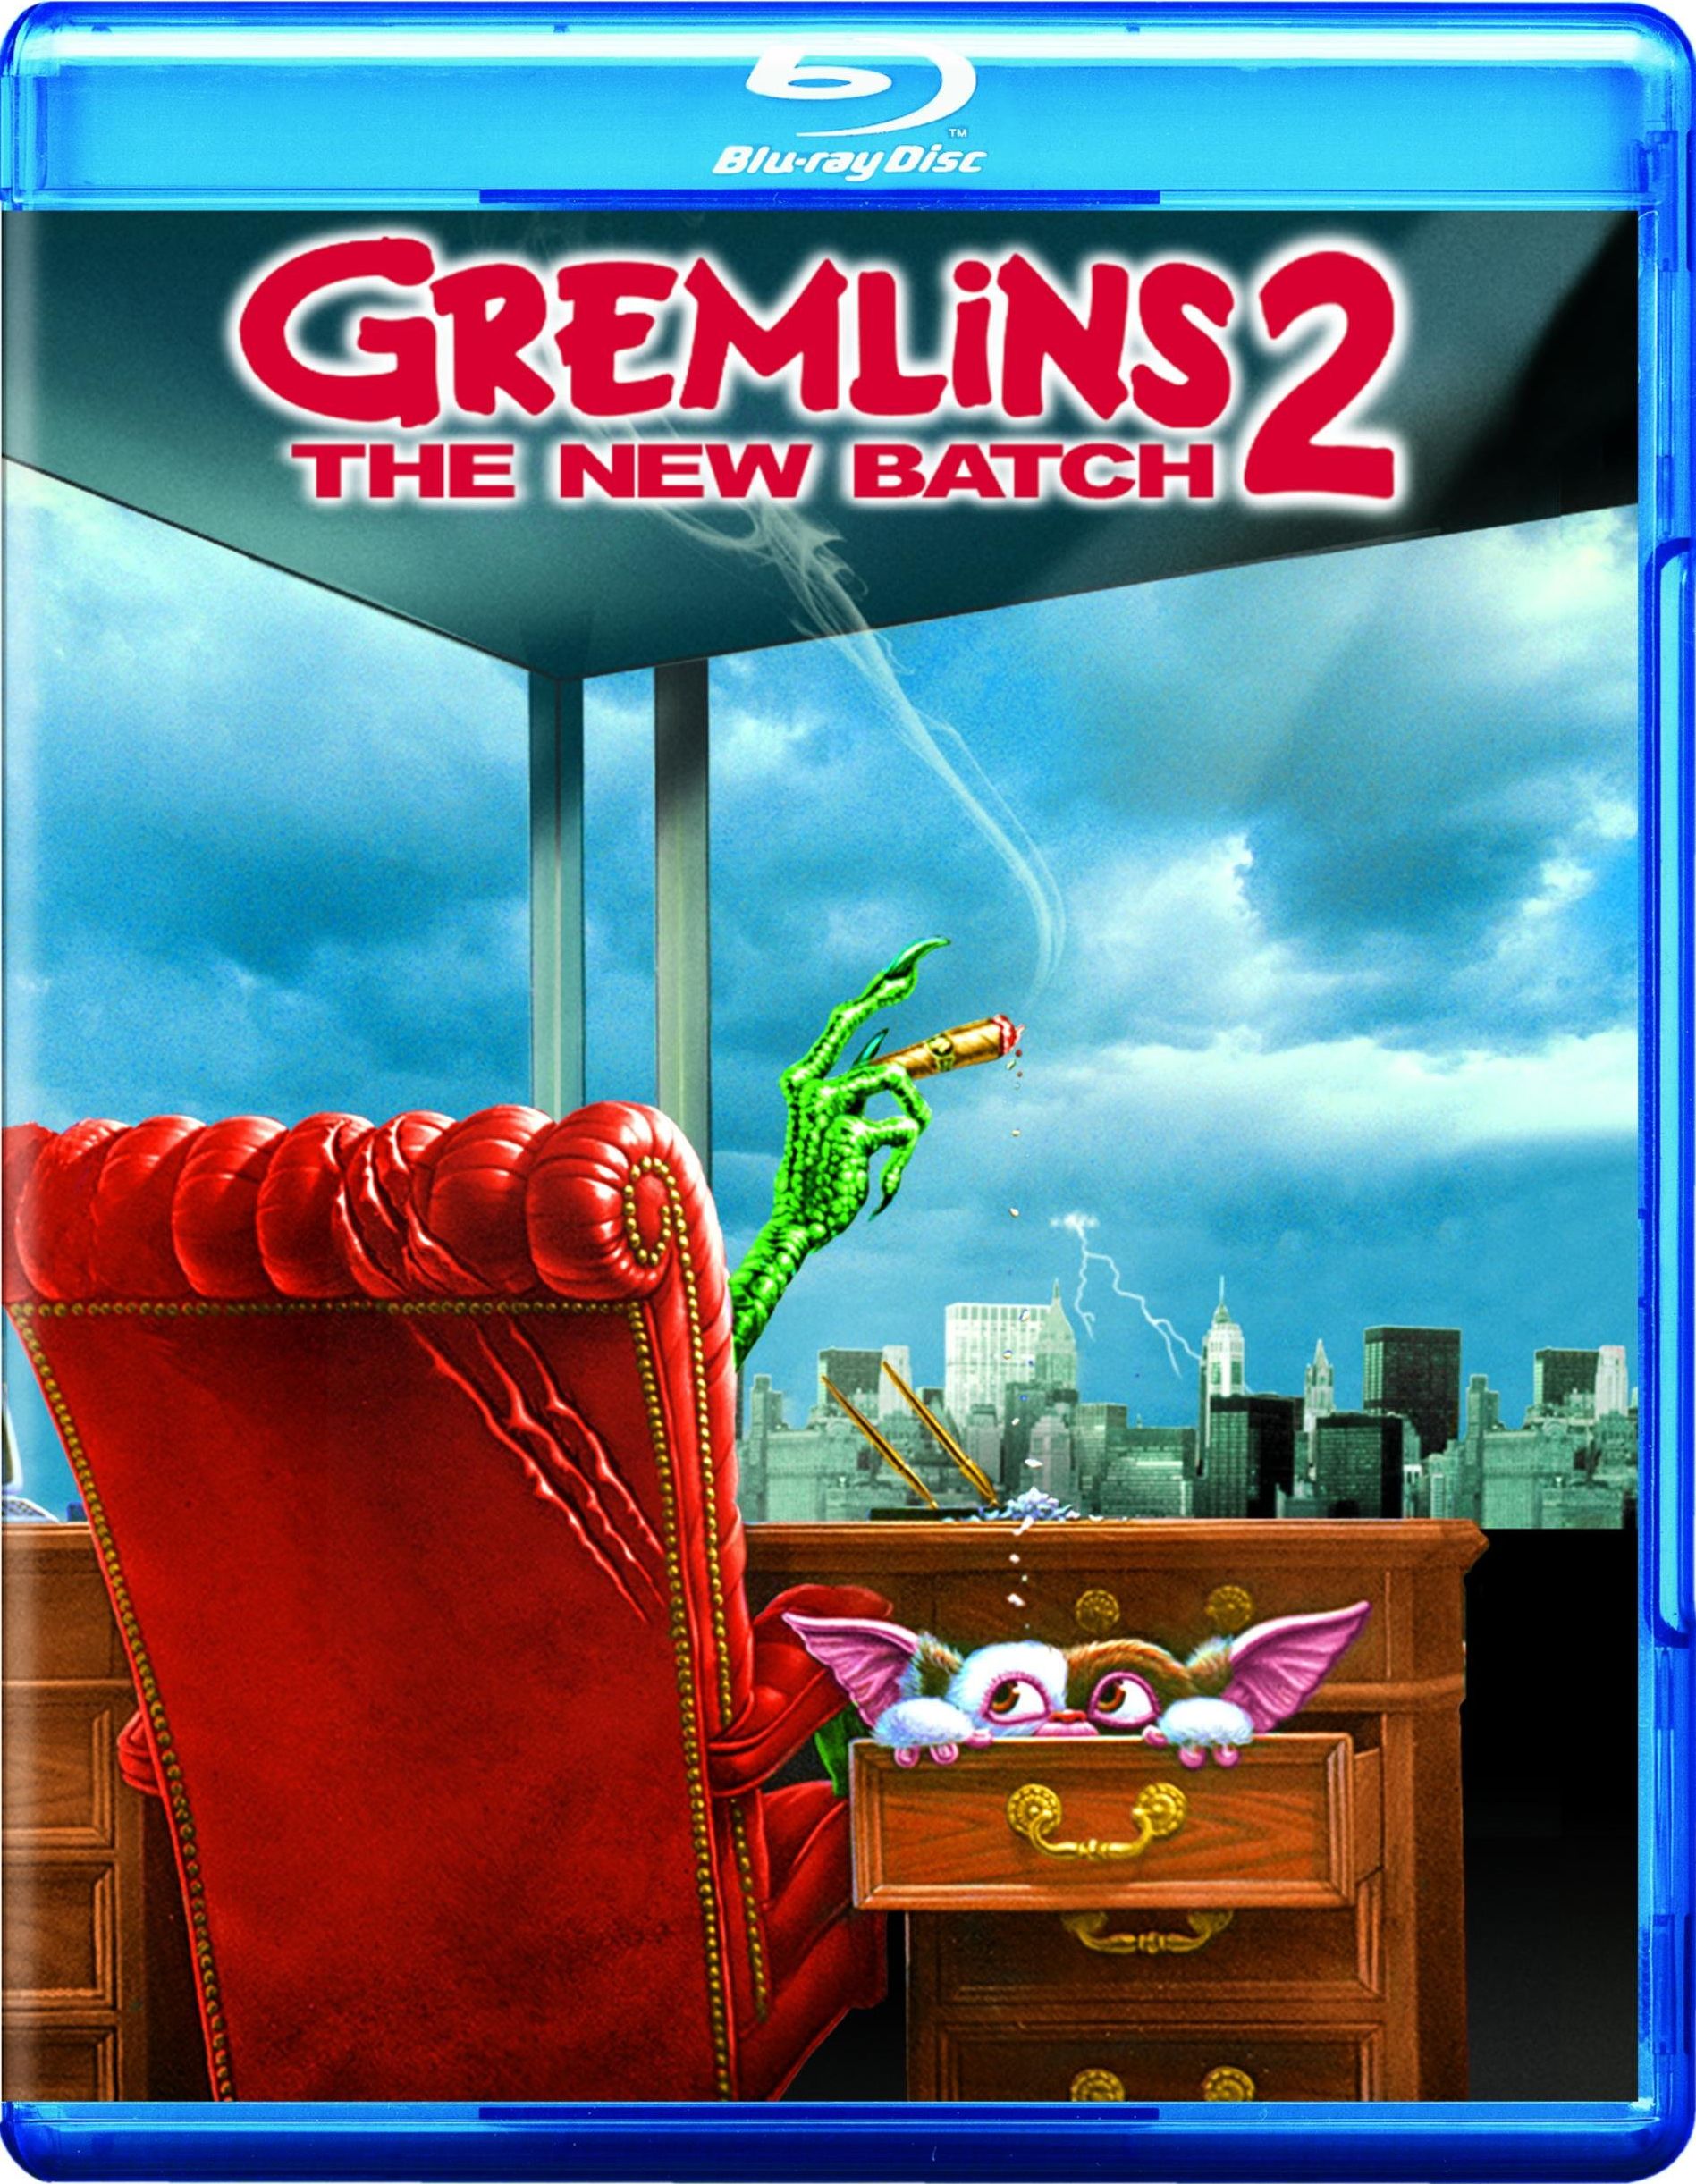 Gremlins 2: The New Batch HD wallpapers, Desktop wallpaper - most viewed